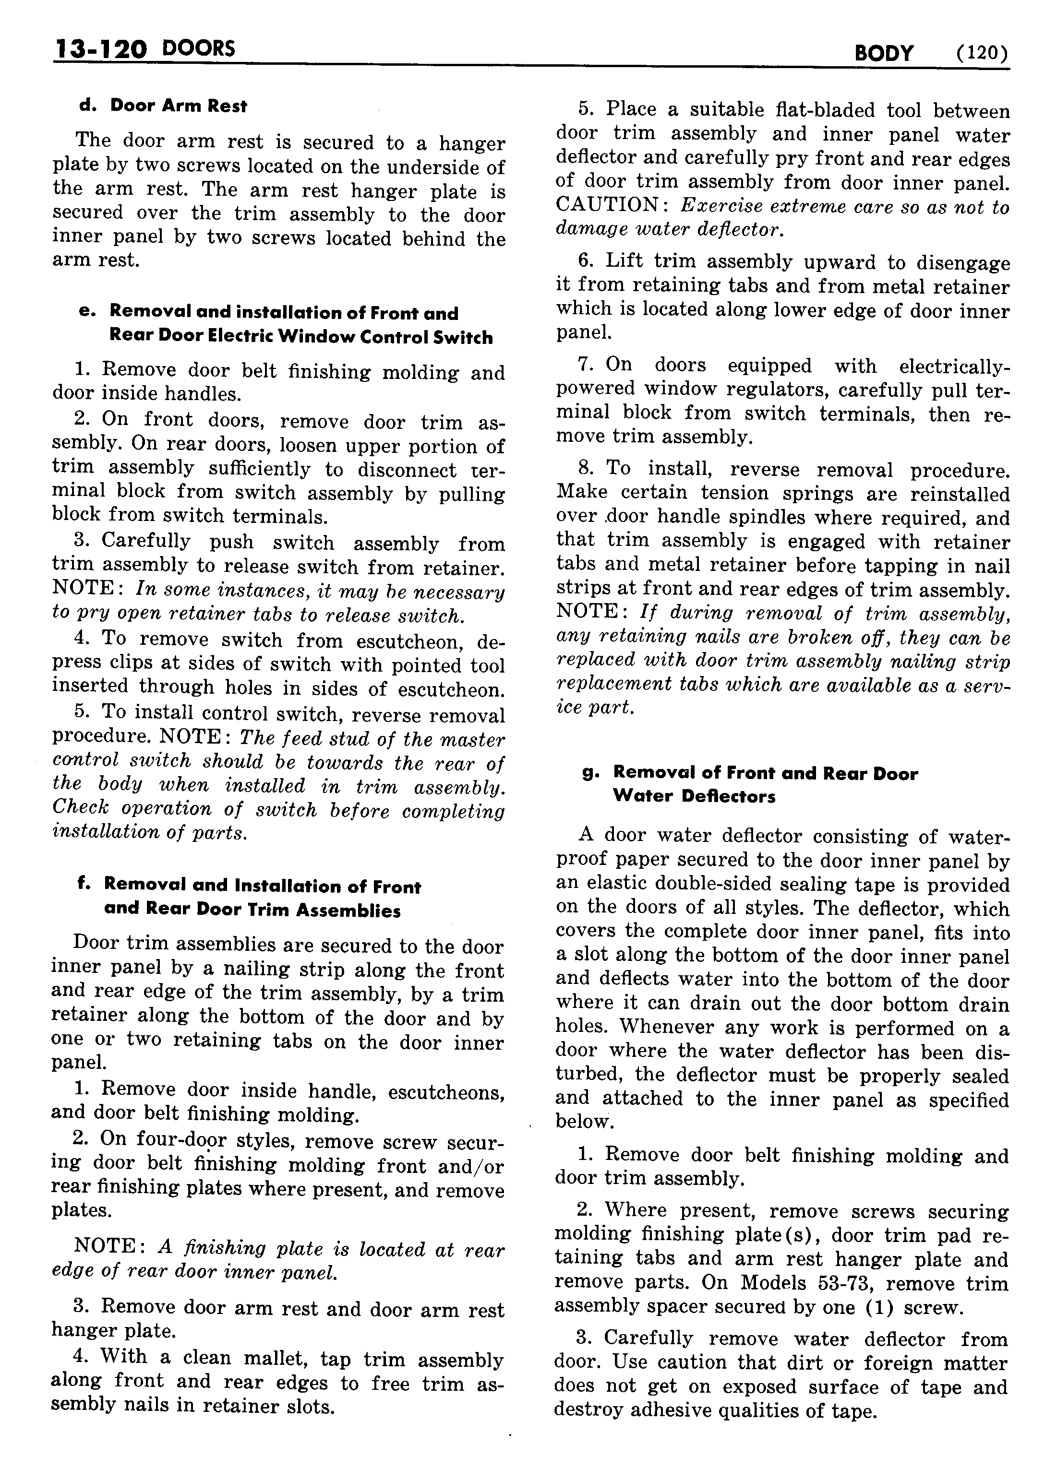 n_1957 Buick Body Service Manual-122-122.jpg